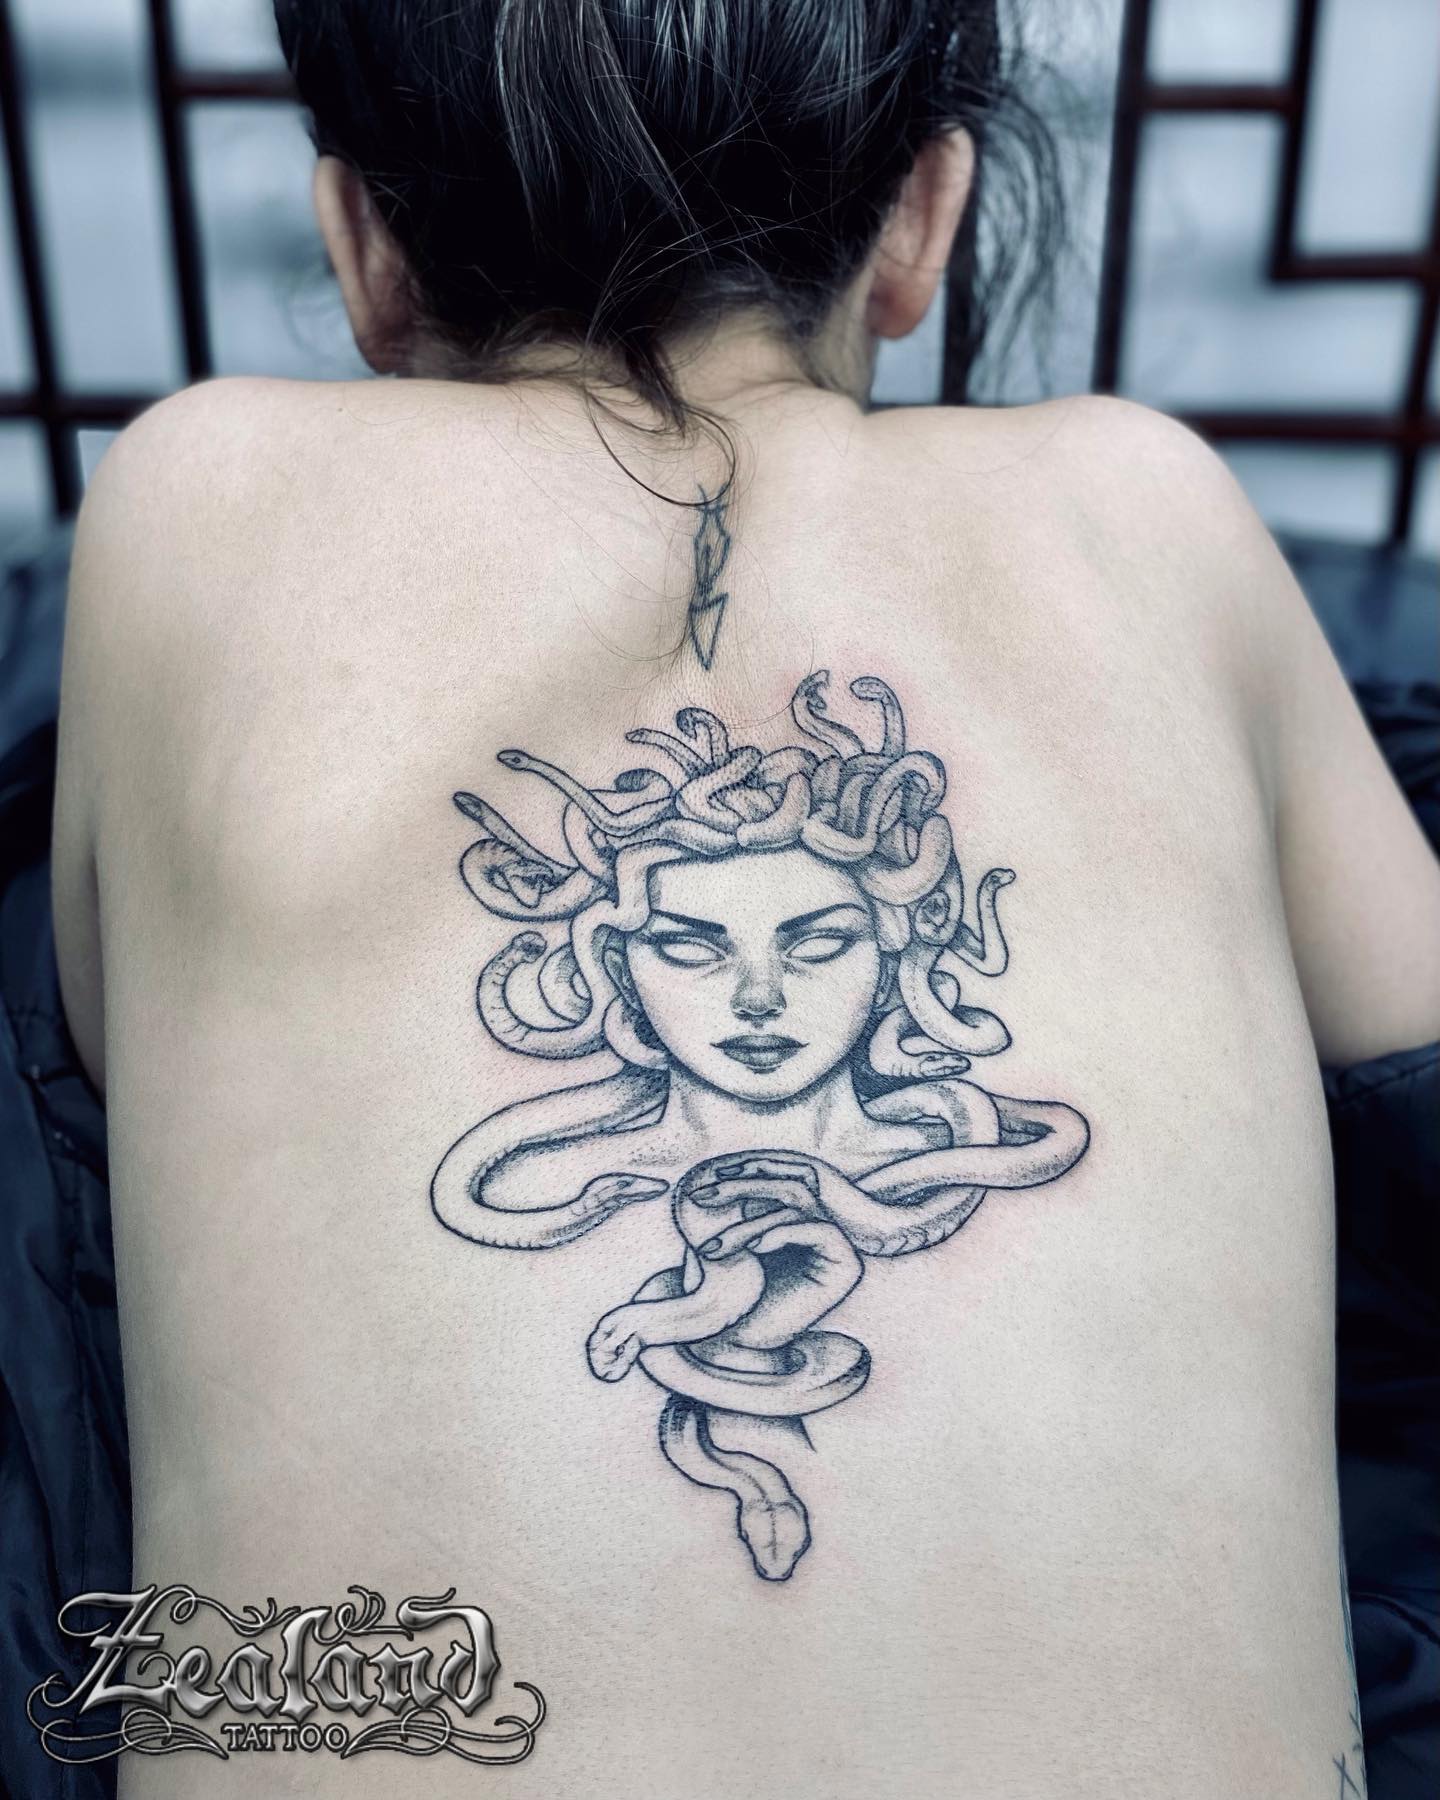 Medusa black and grey back tattoo - Zealand Tattoo